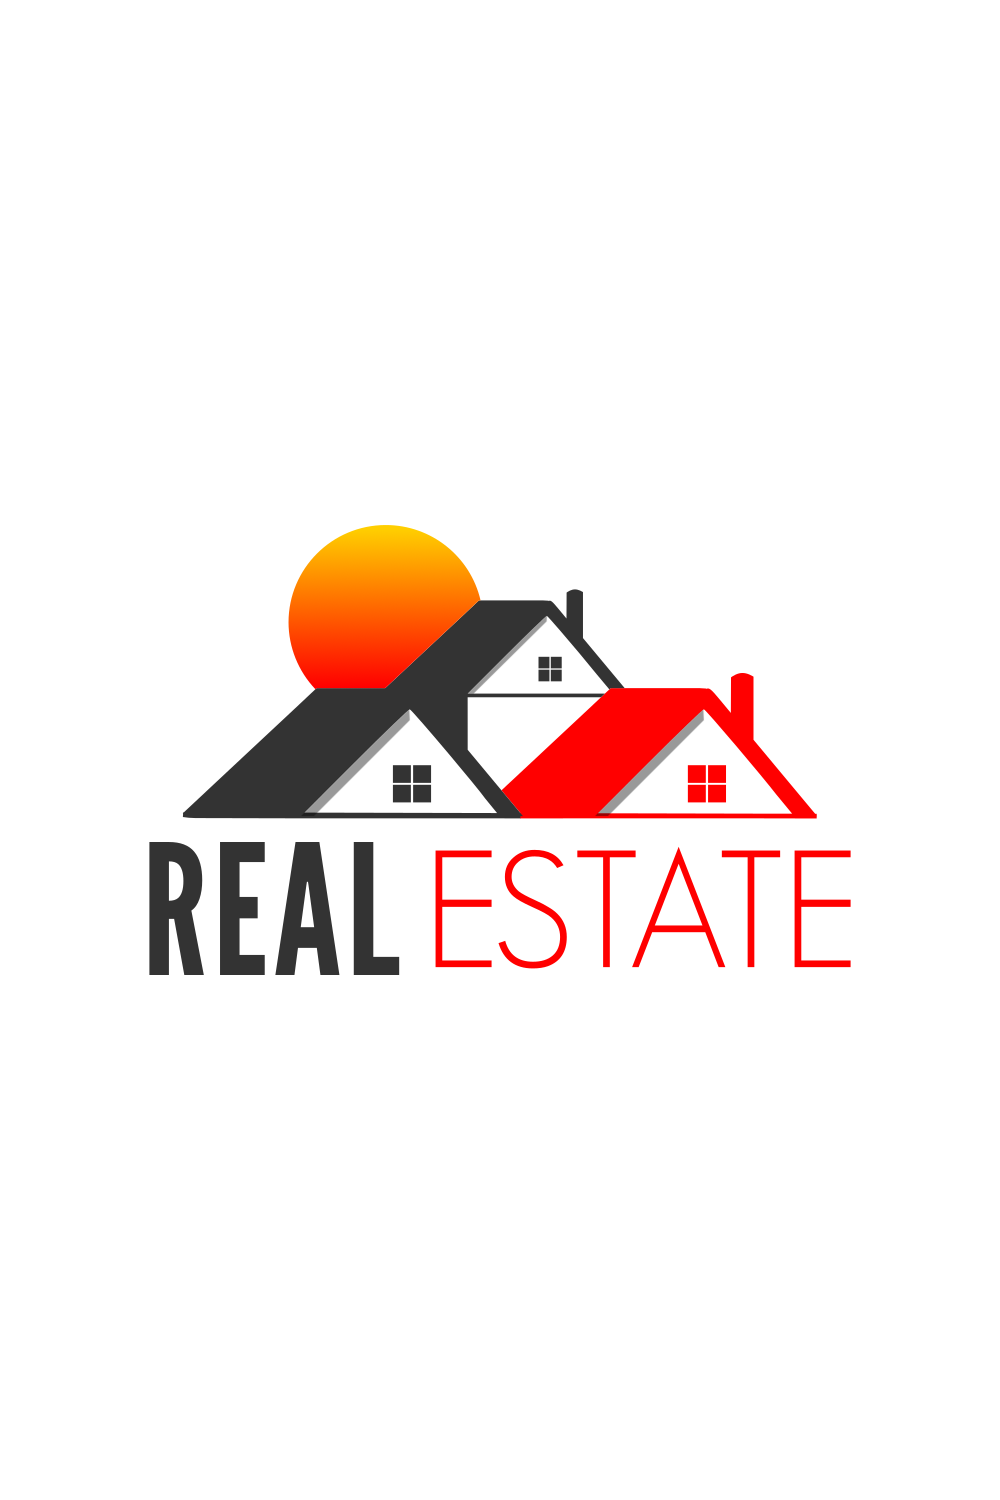 Real Estate Business Logo Design Template pinterest image.